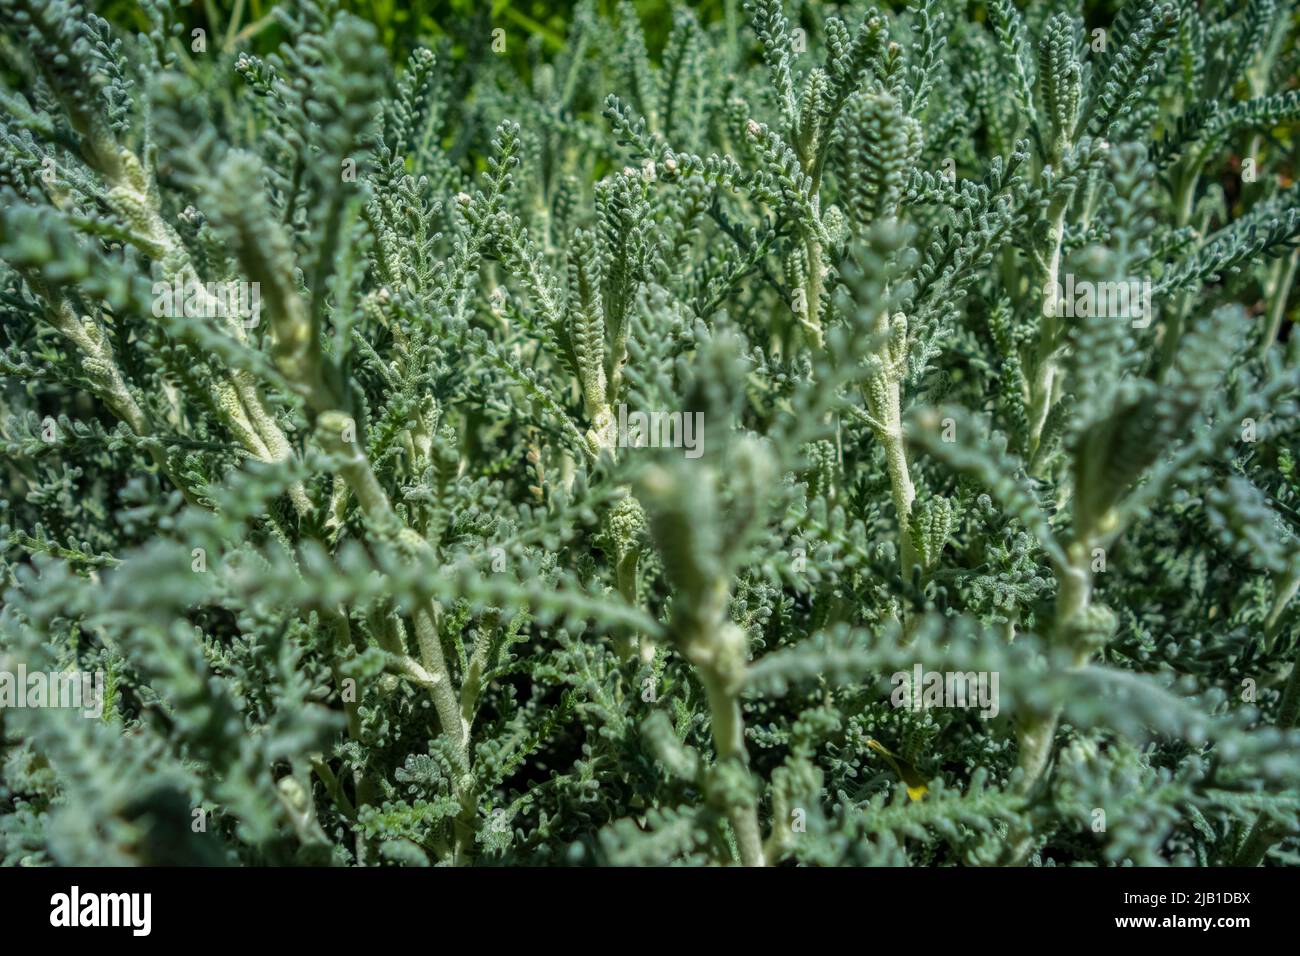 Full frame sunny illuminated green cotton lavender plant vegetation Stock Photo